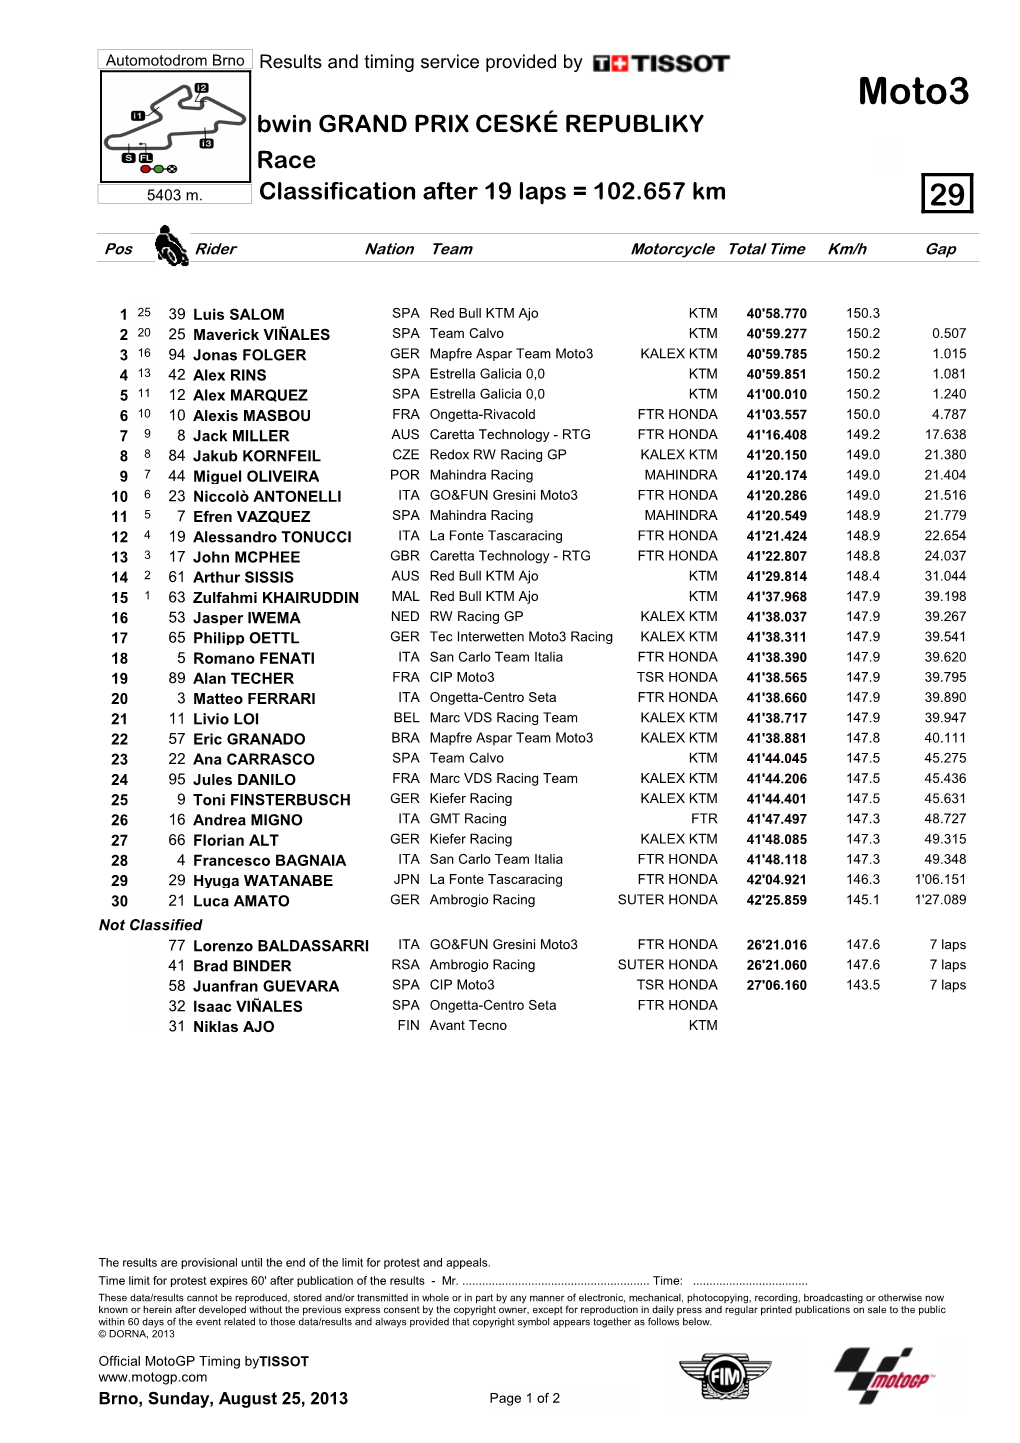 Moto3 Bwin GRAND PRIX CESKÉ REPUBLIKY Race 5403 M